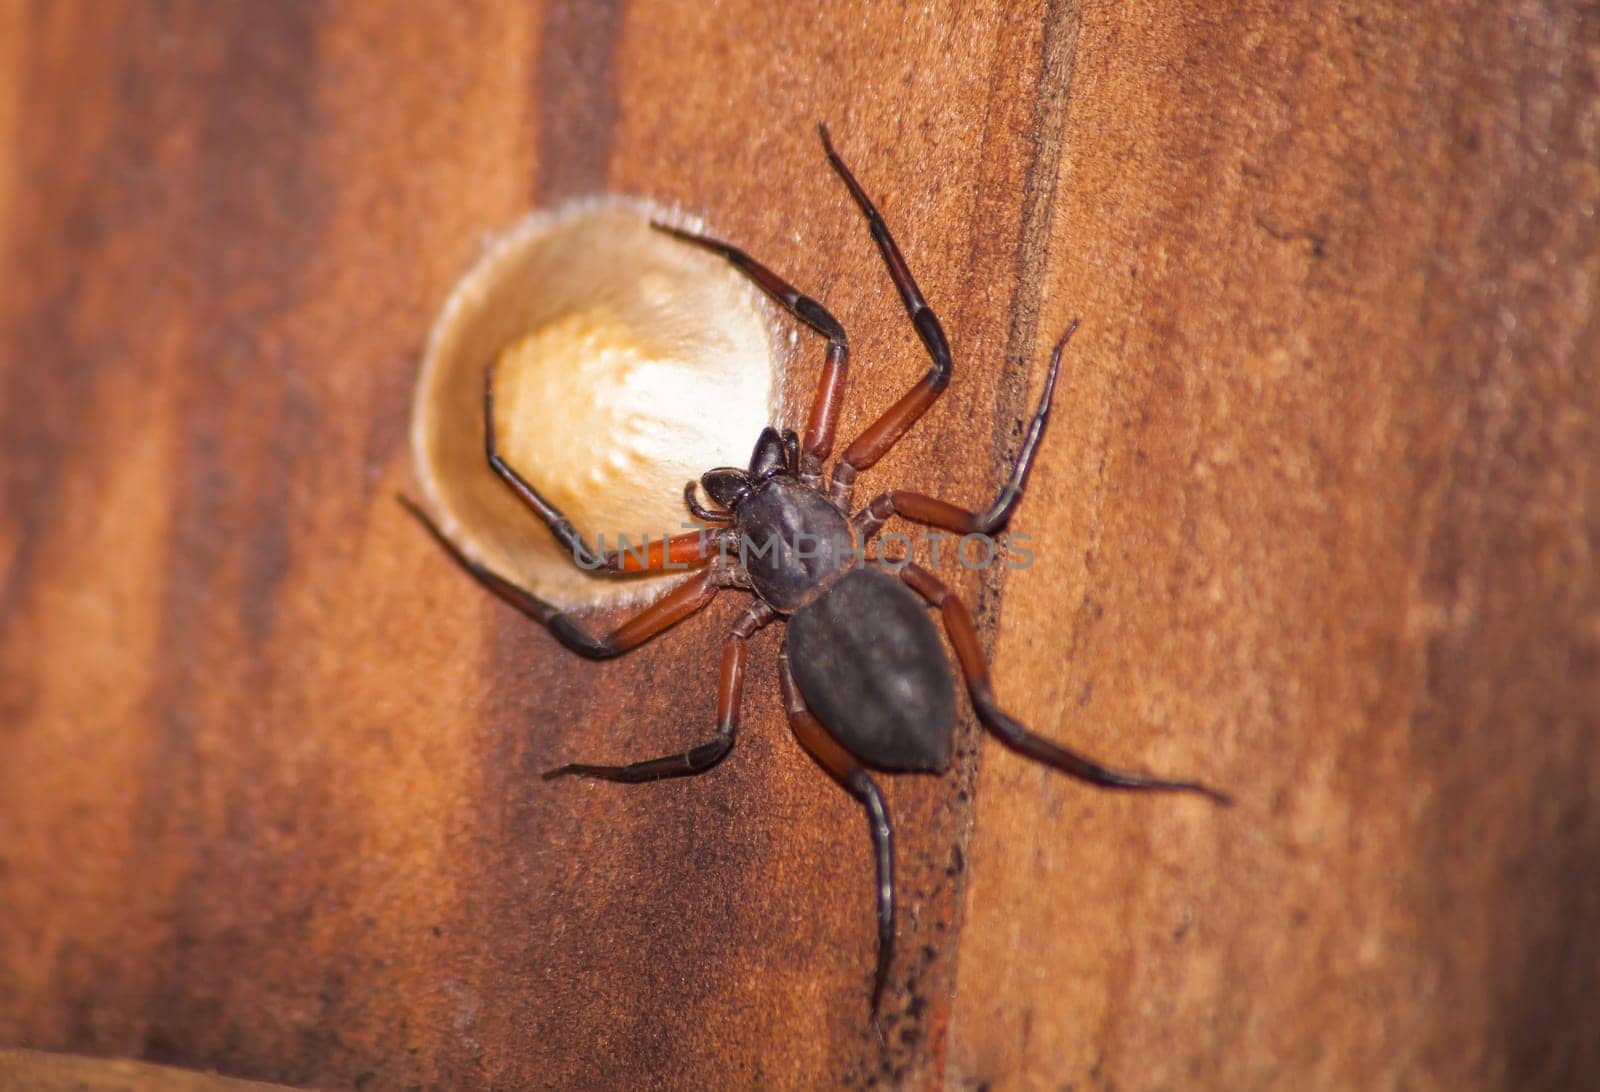 Female Scorpion Spider (Platyoides walteri) guarding her egg sack